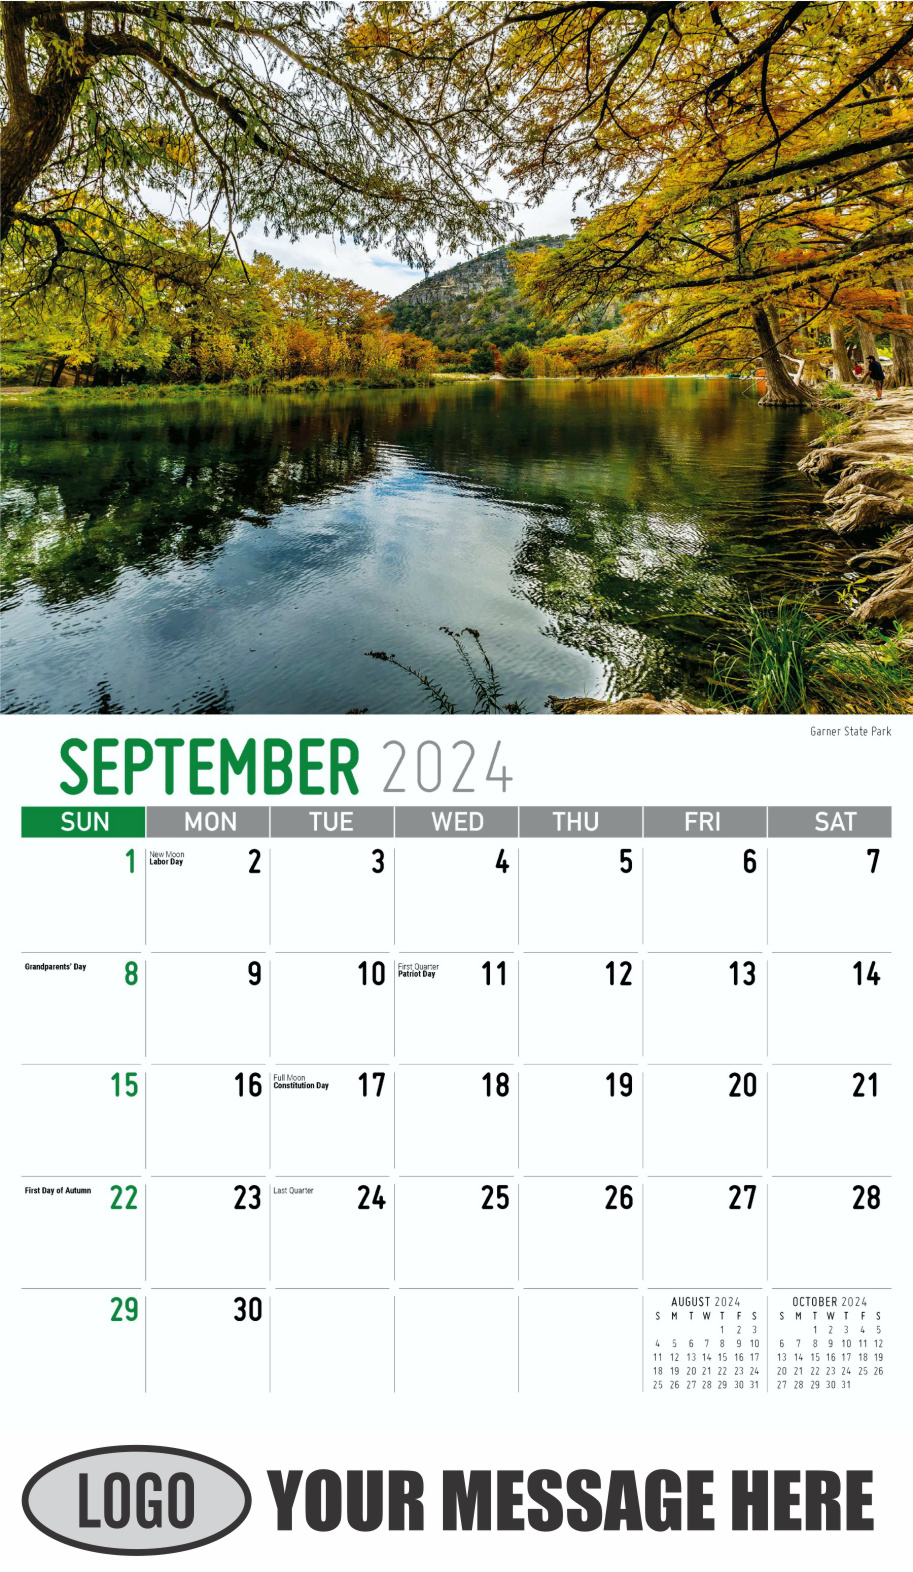 Scenes of Texas 2024 Business Advertising Calendar - September